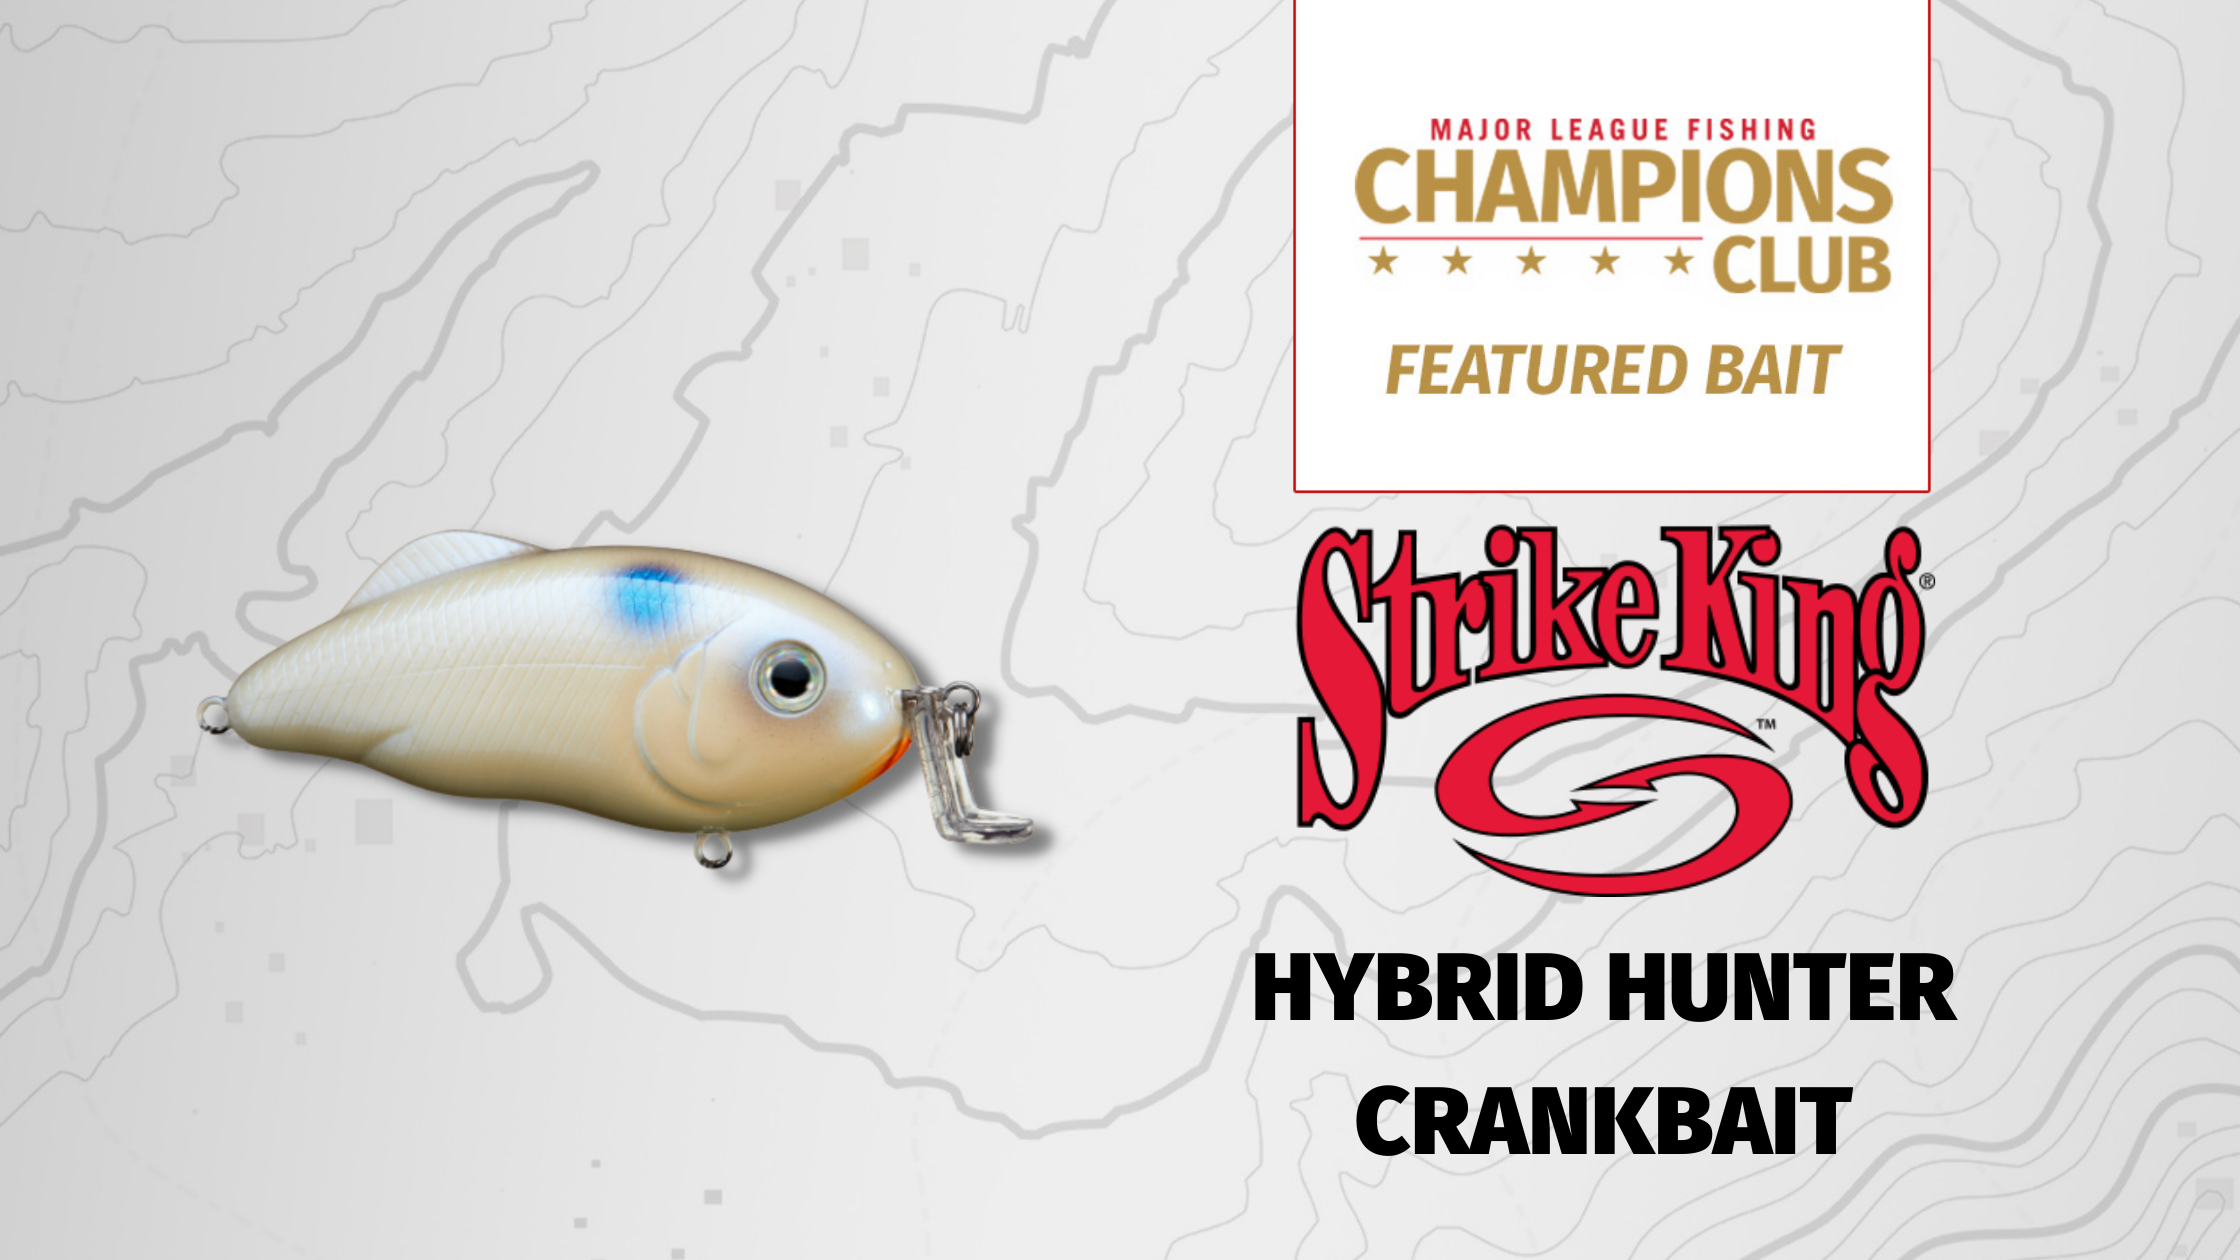 Strike King Hybrid Hunter Crankbait - Product Features 